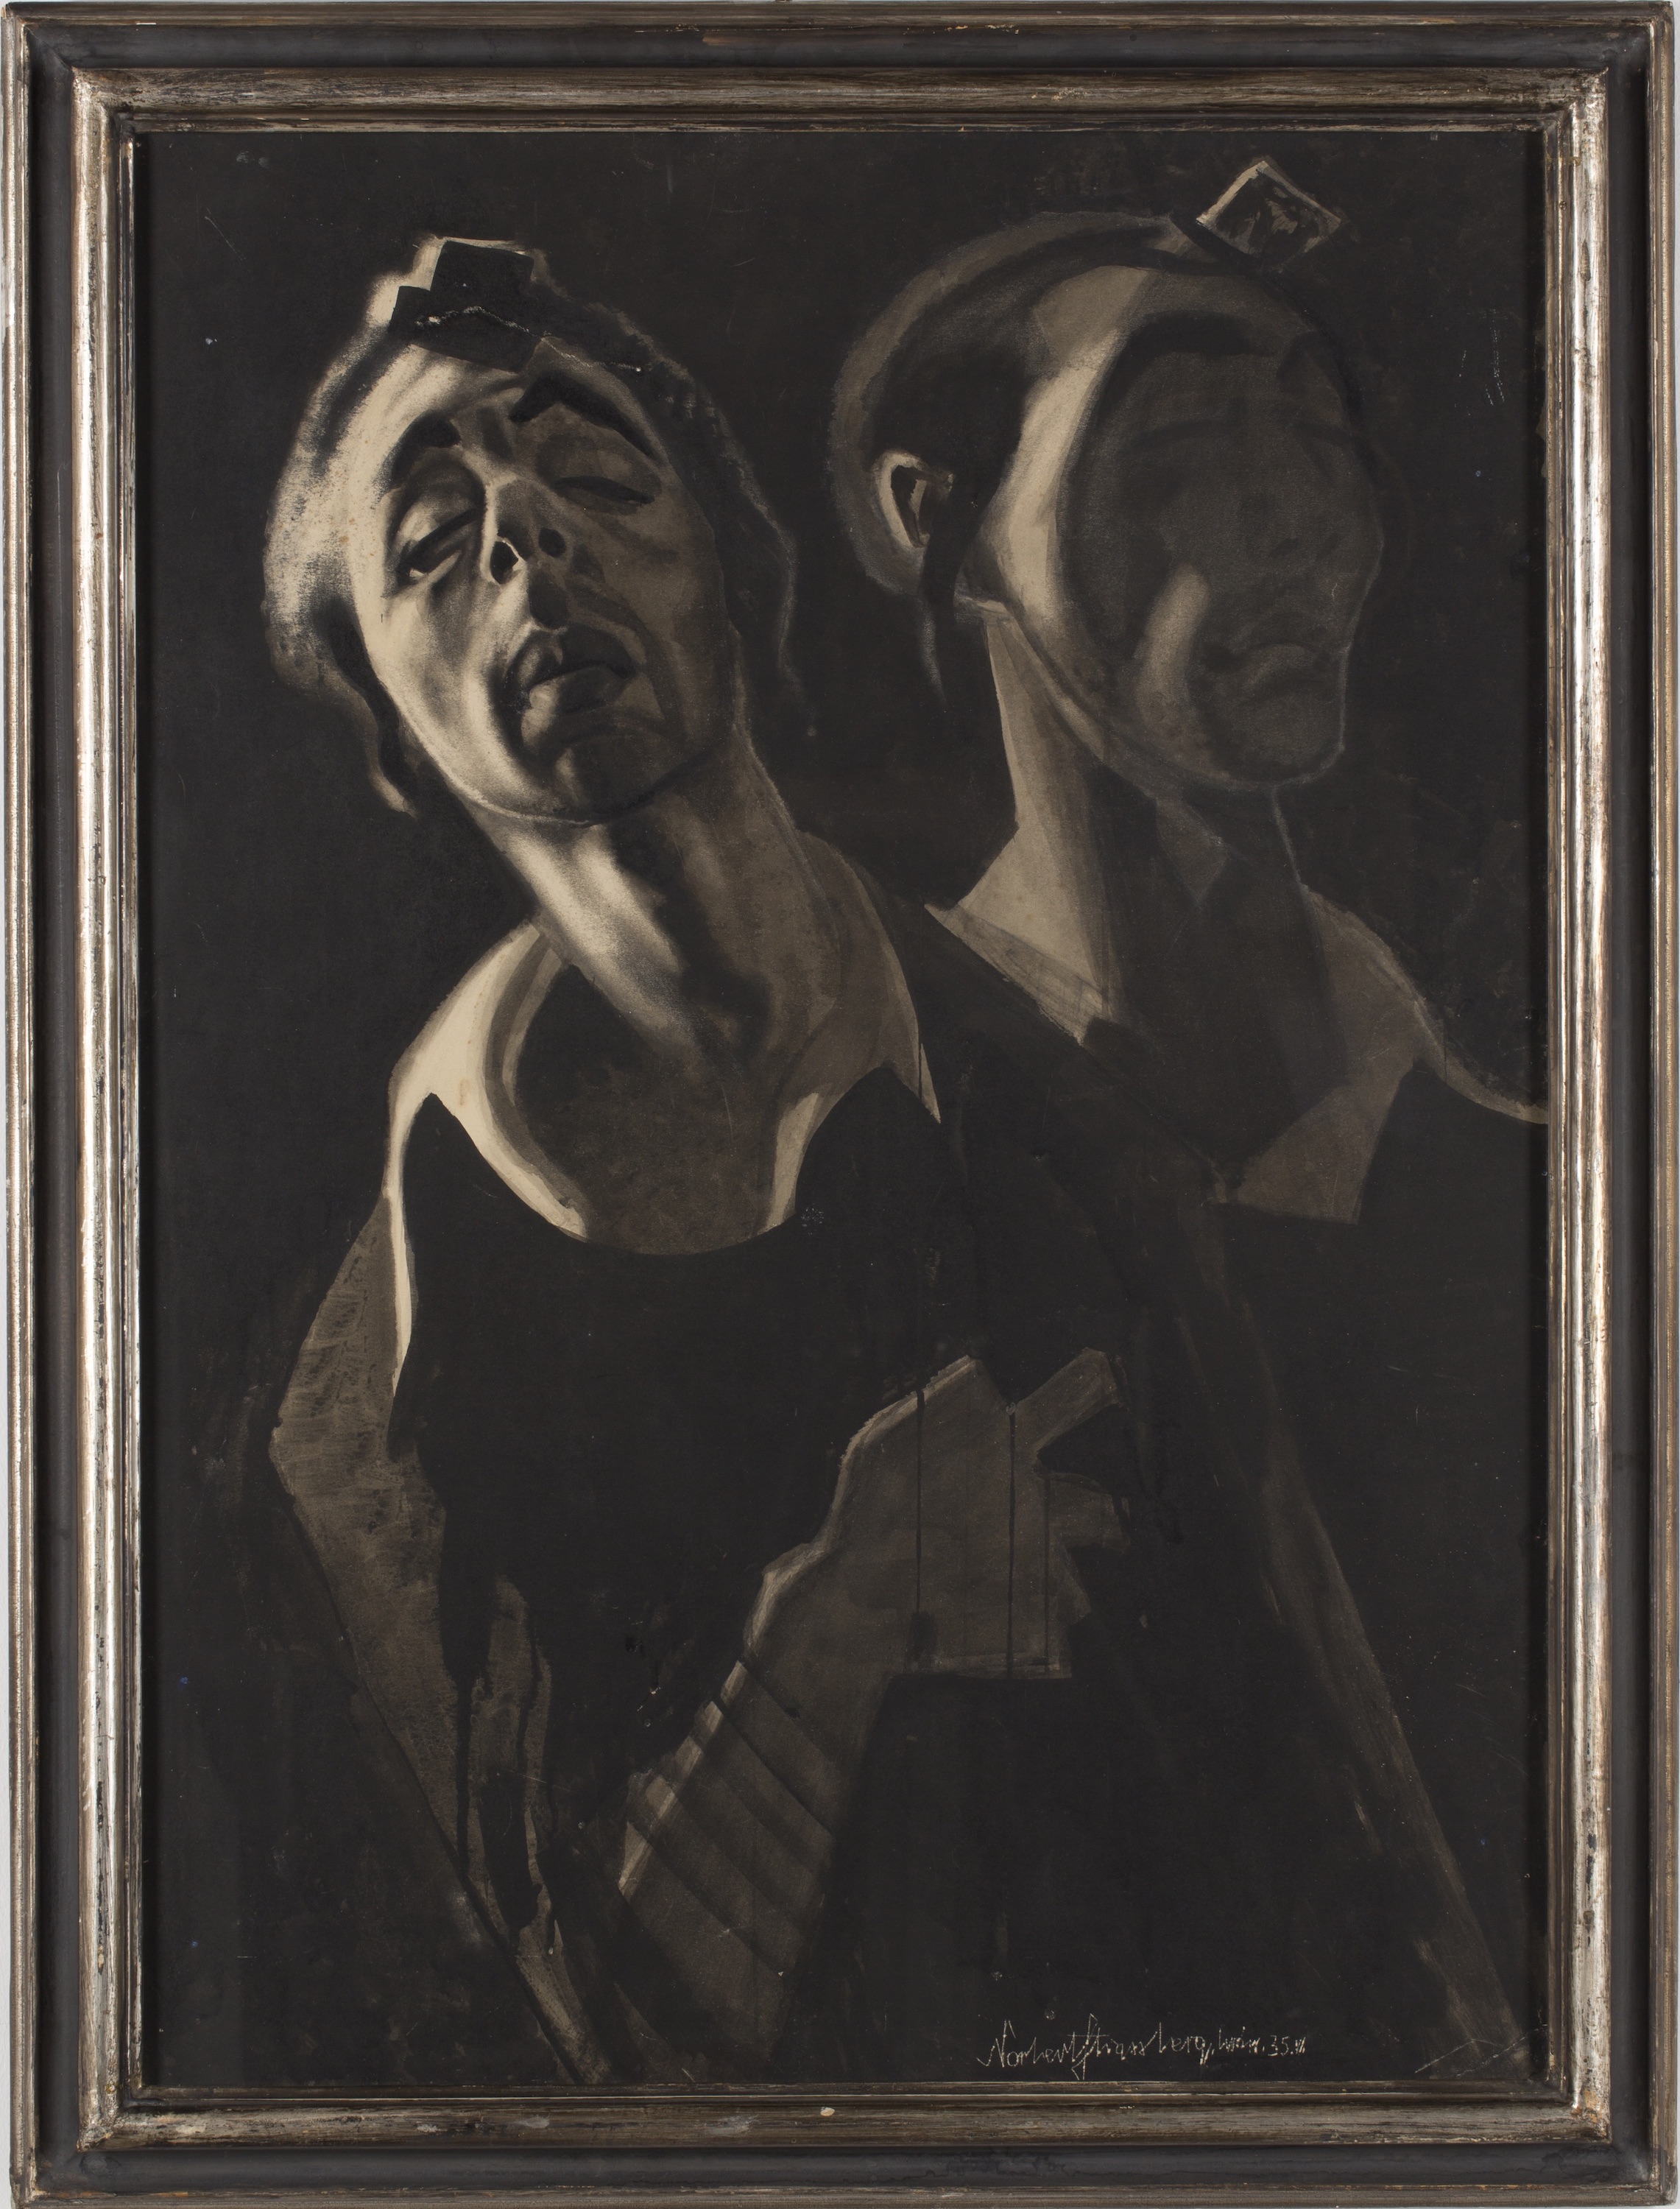 Ecstasy (Morning Prayer) by Norbert Strassberg - 1935 - 85 x 62 cm Jewish Historical Institute